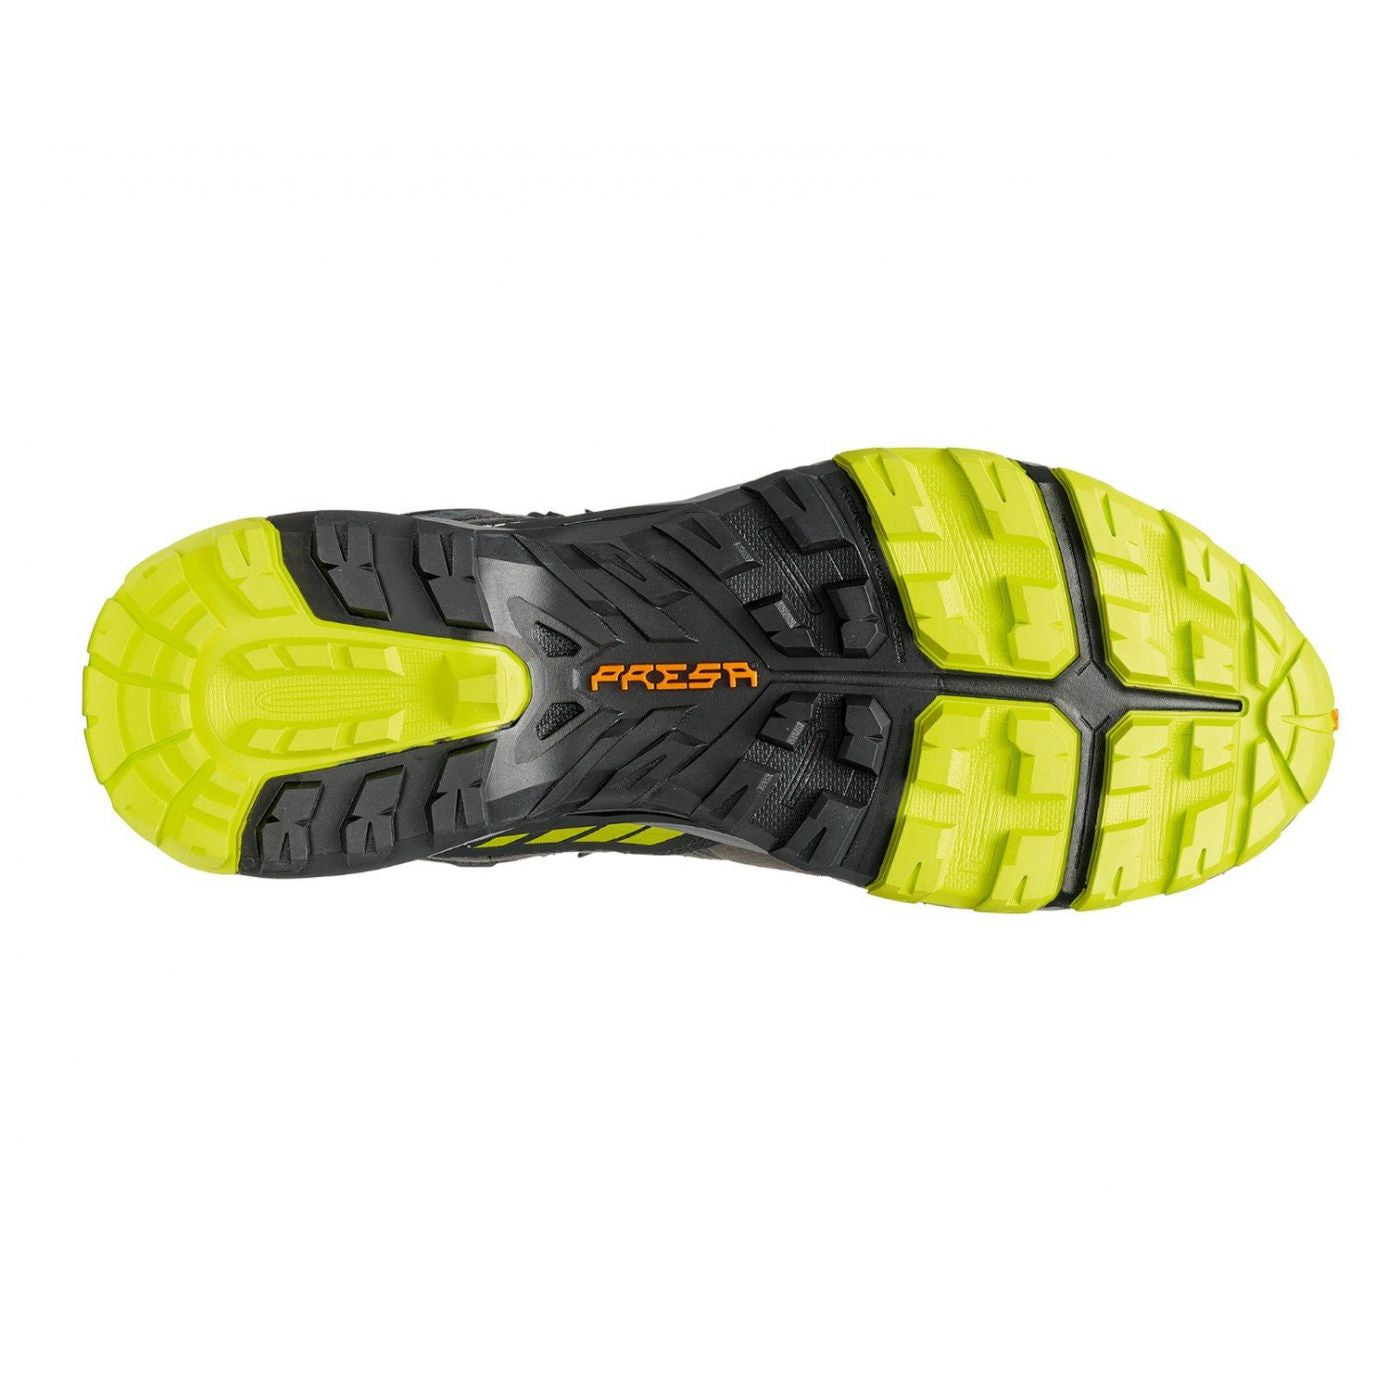 Scarpa Men's Rush Trek GTX Hiking Boots